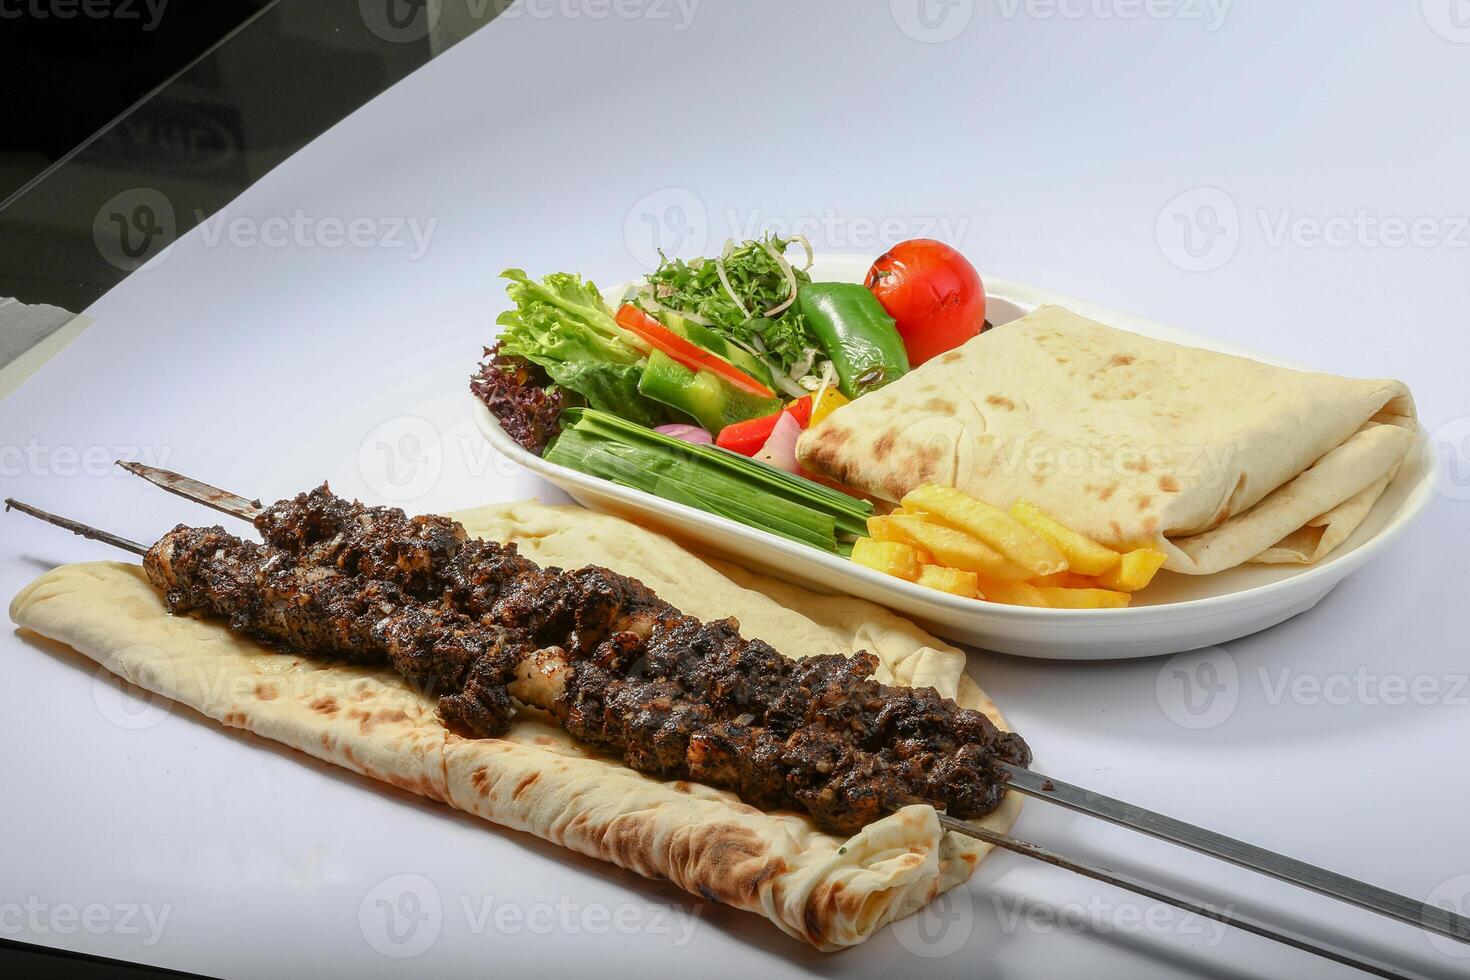 iraní tikka bota brocheta plato con ensalada, papas fritas, y Agave un pan servido en plato lado ver de árabe comida foto